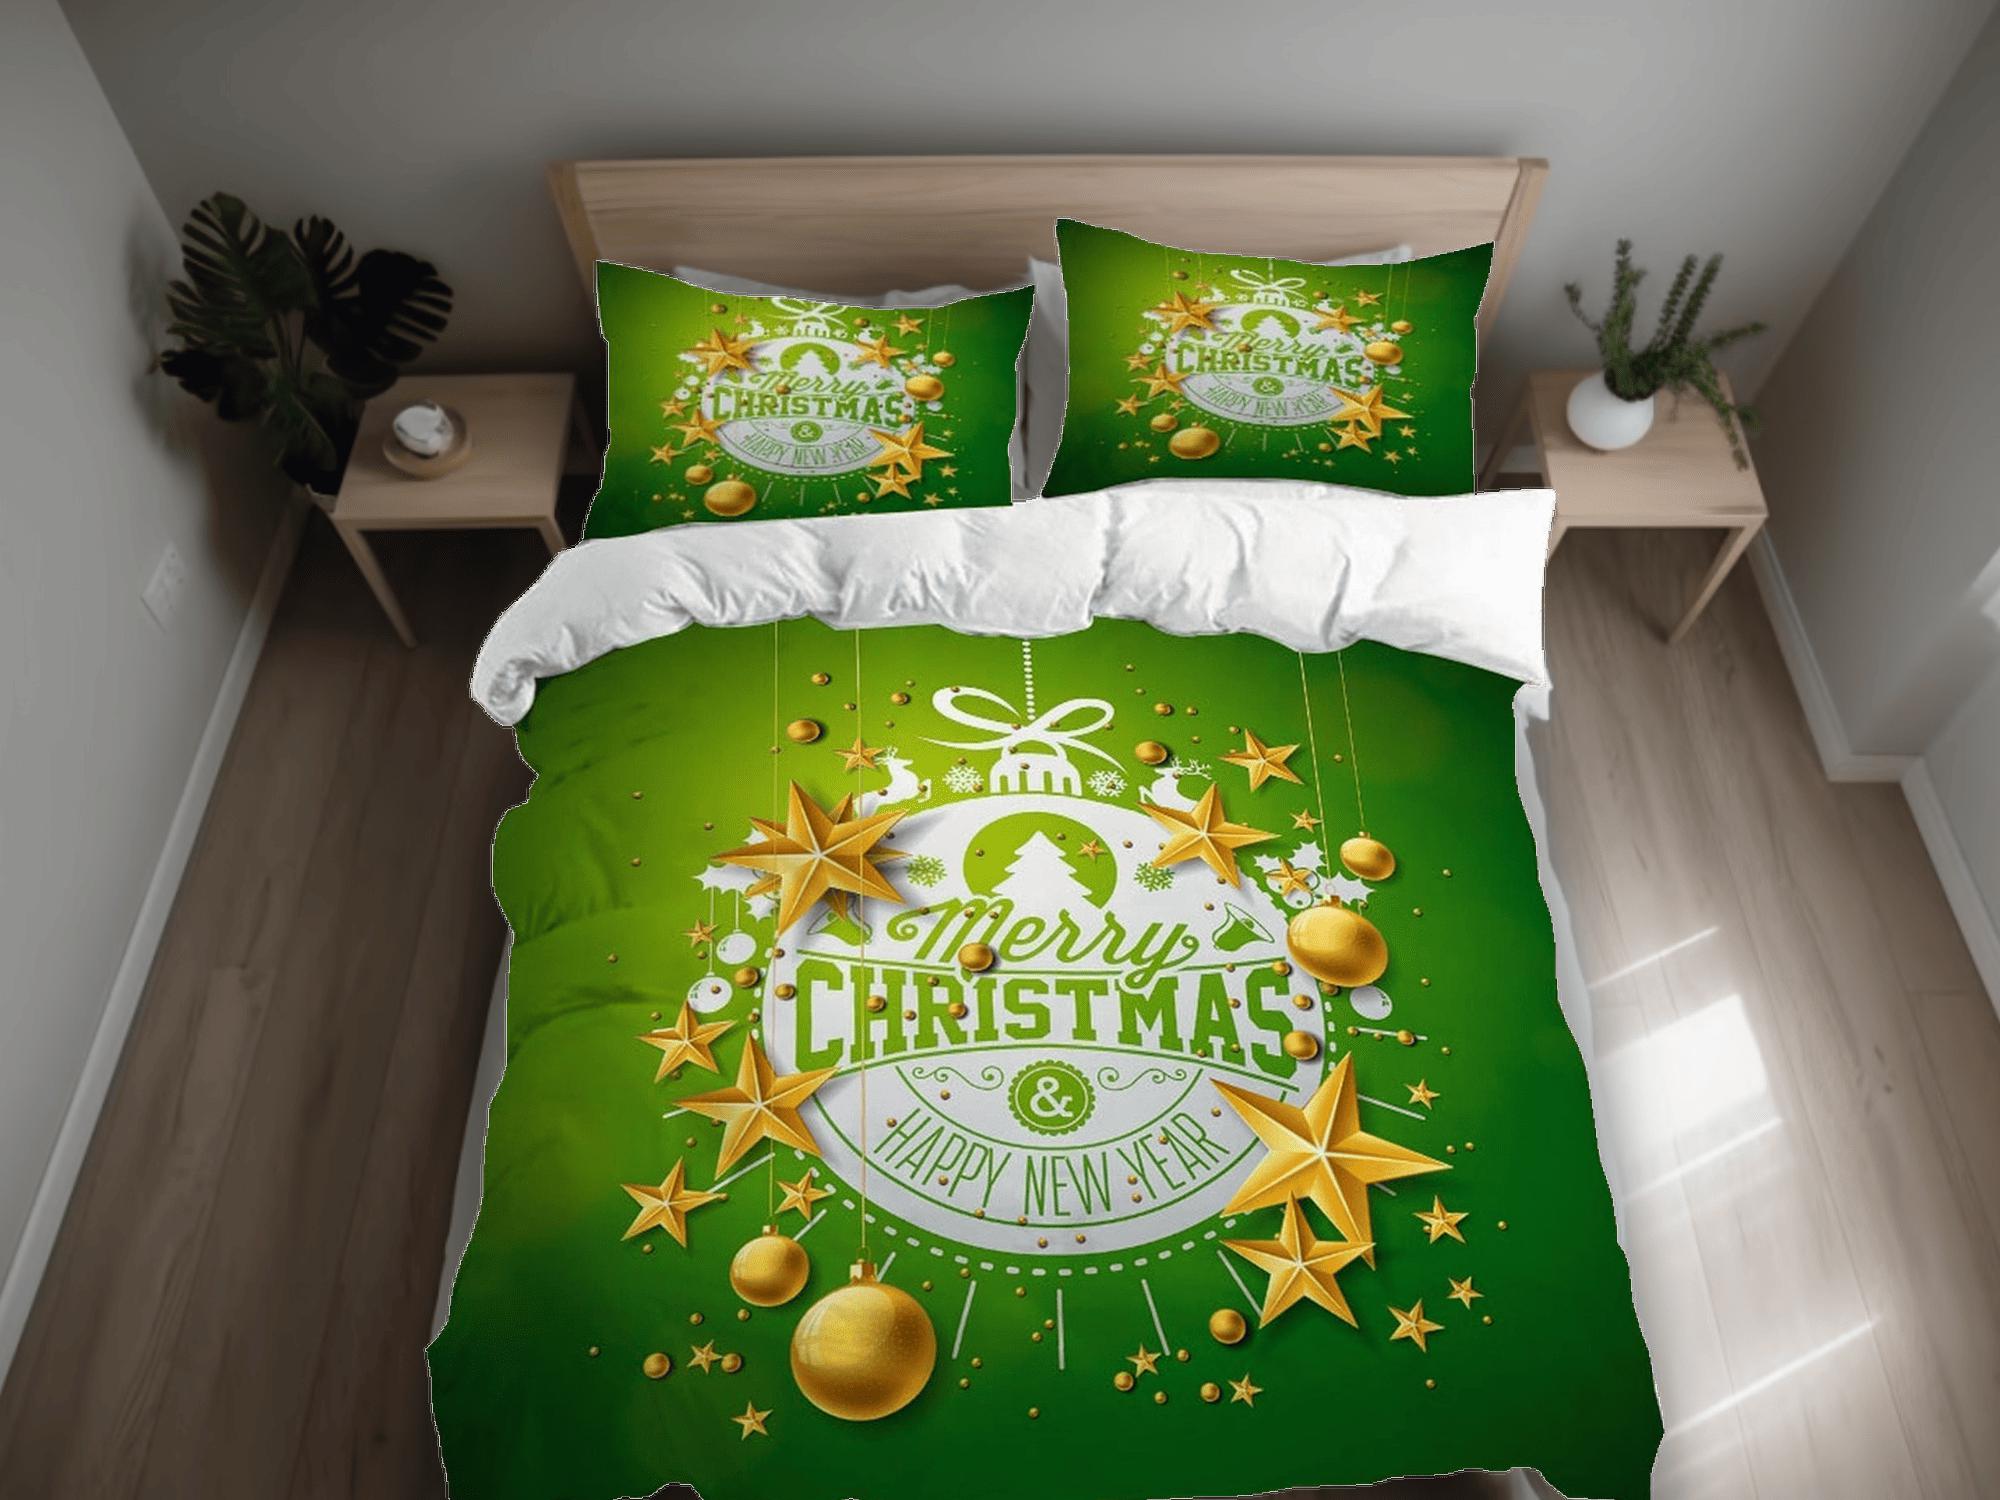 daintyduvet Green Christmas bauble bedding & pillowcase holiday gift duvet cover king queen full twin toddler bedding baby Christmas farmhouse decor